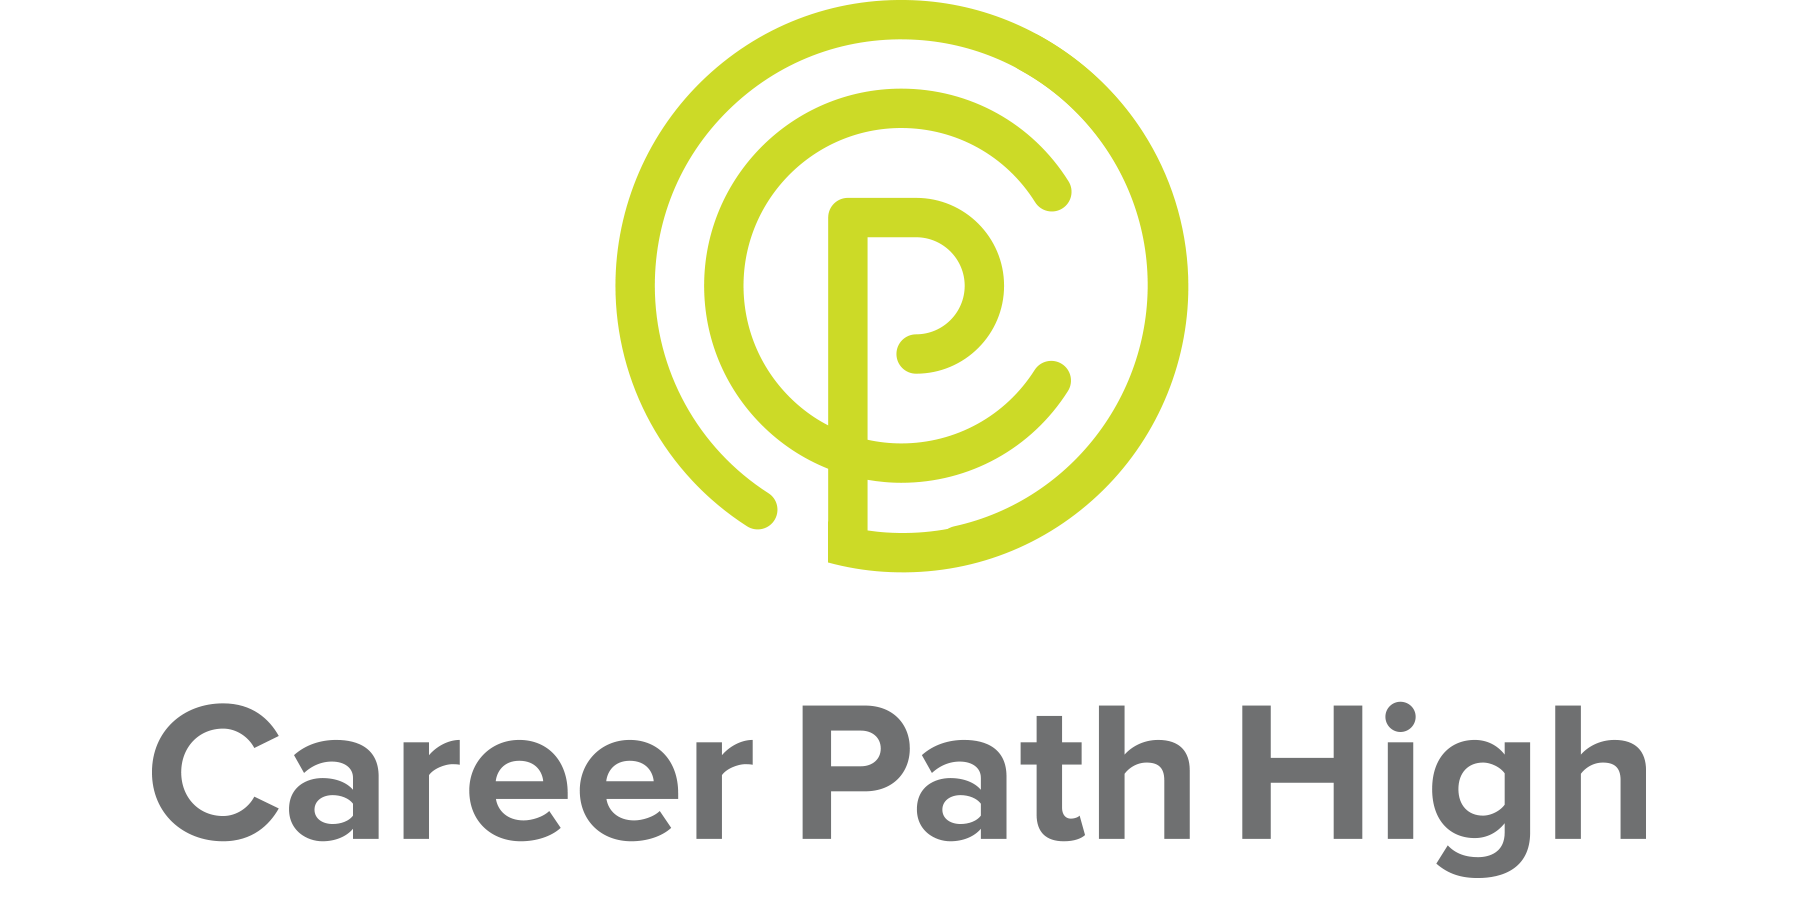 Career Path High logo